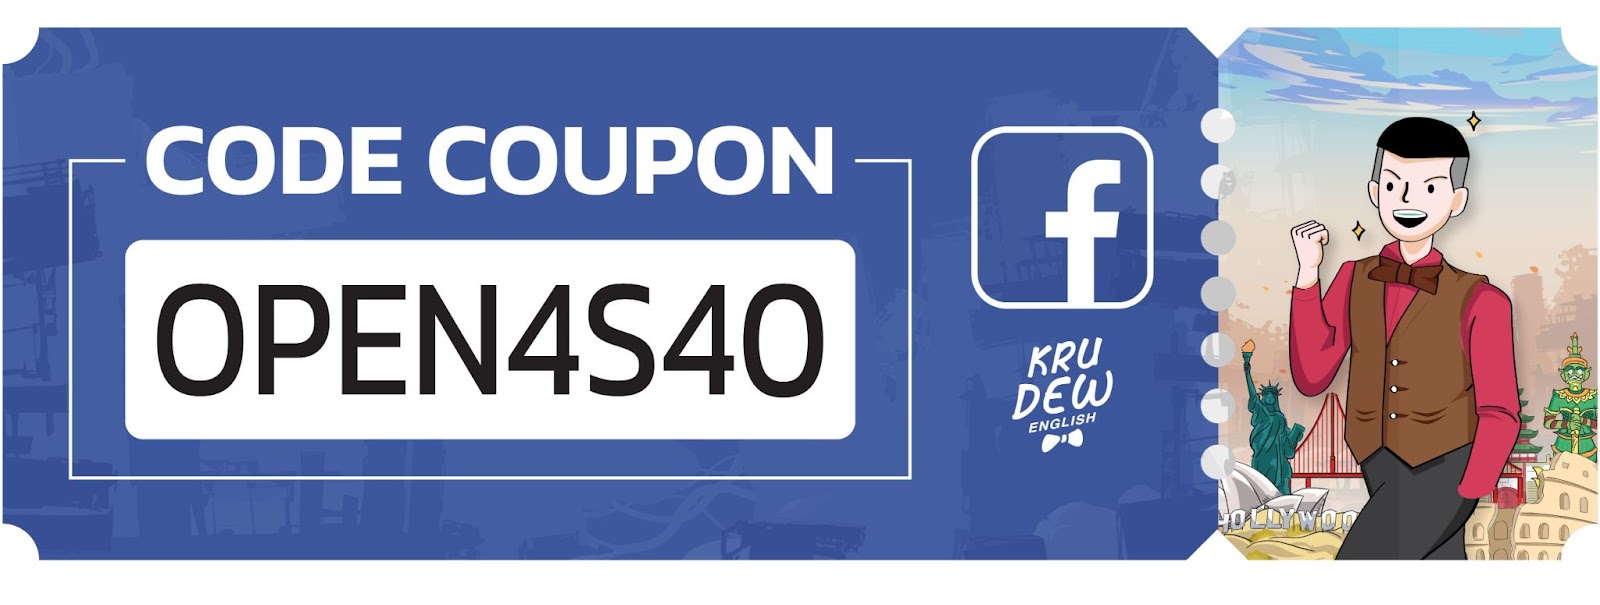 a printed blue code coupon with a Facebook logo